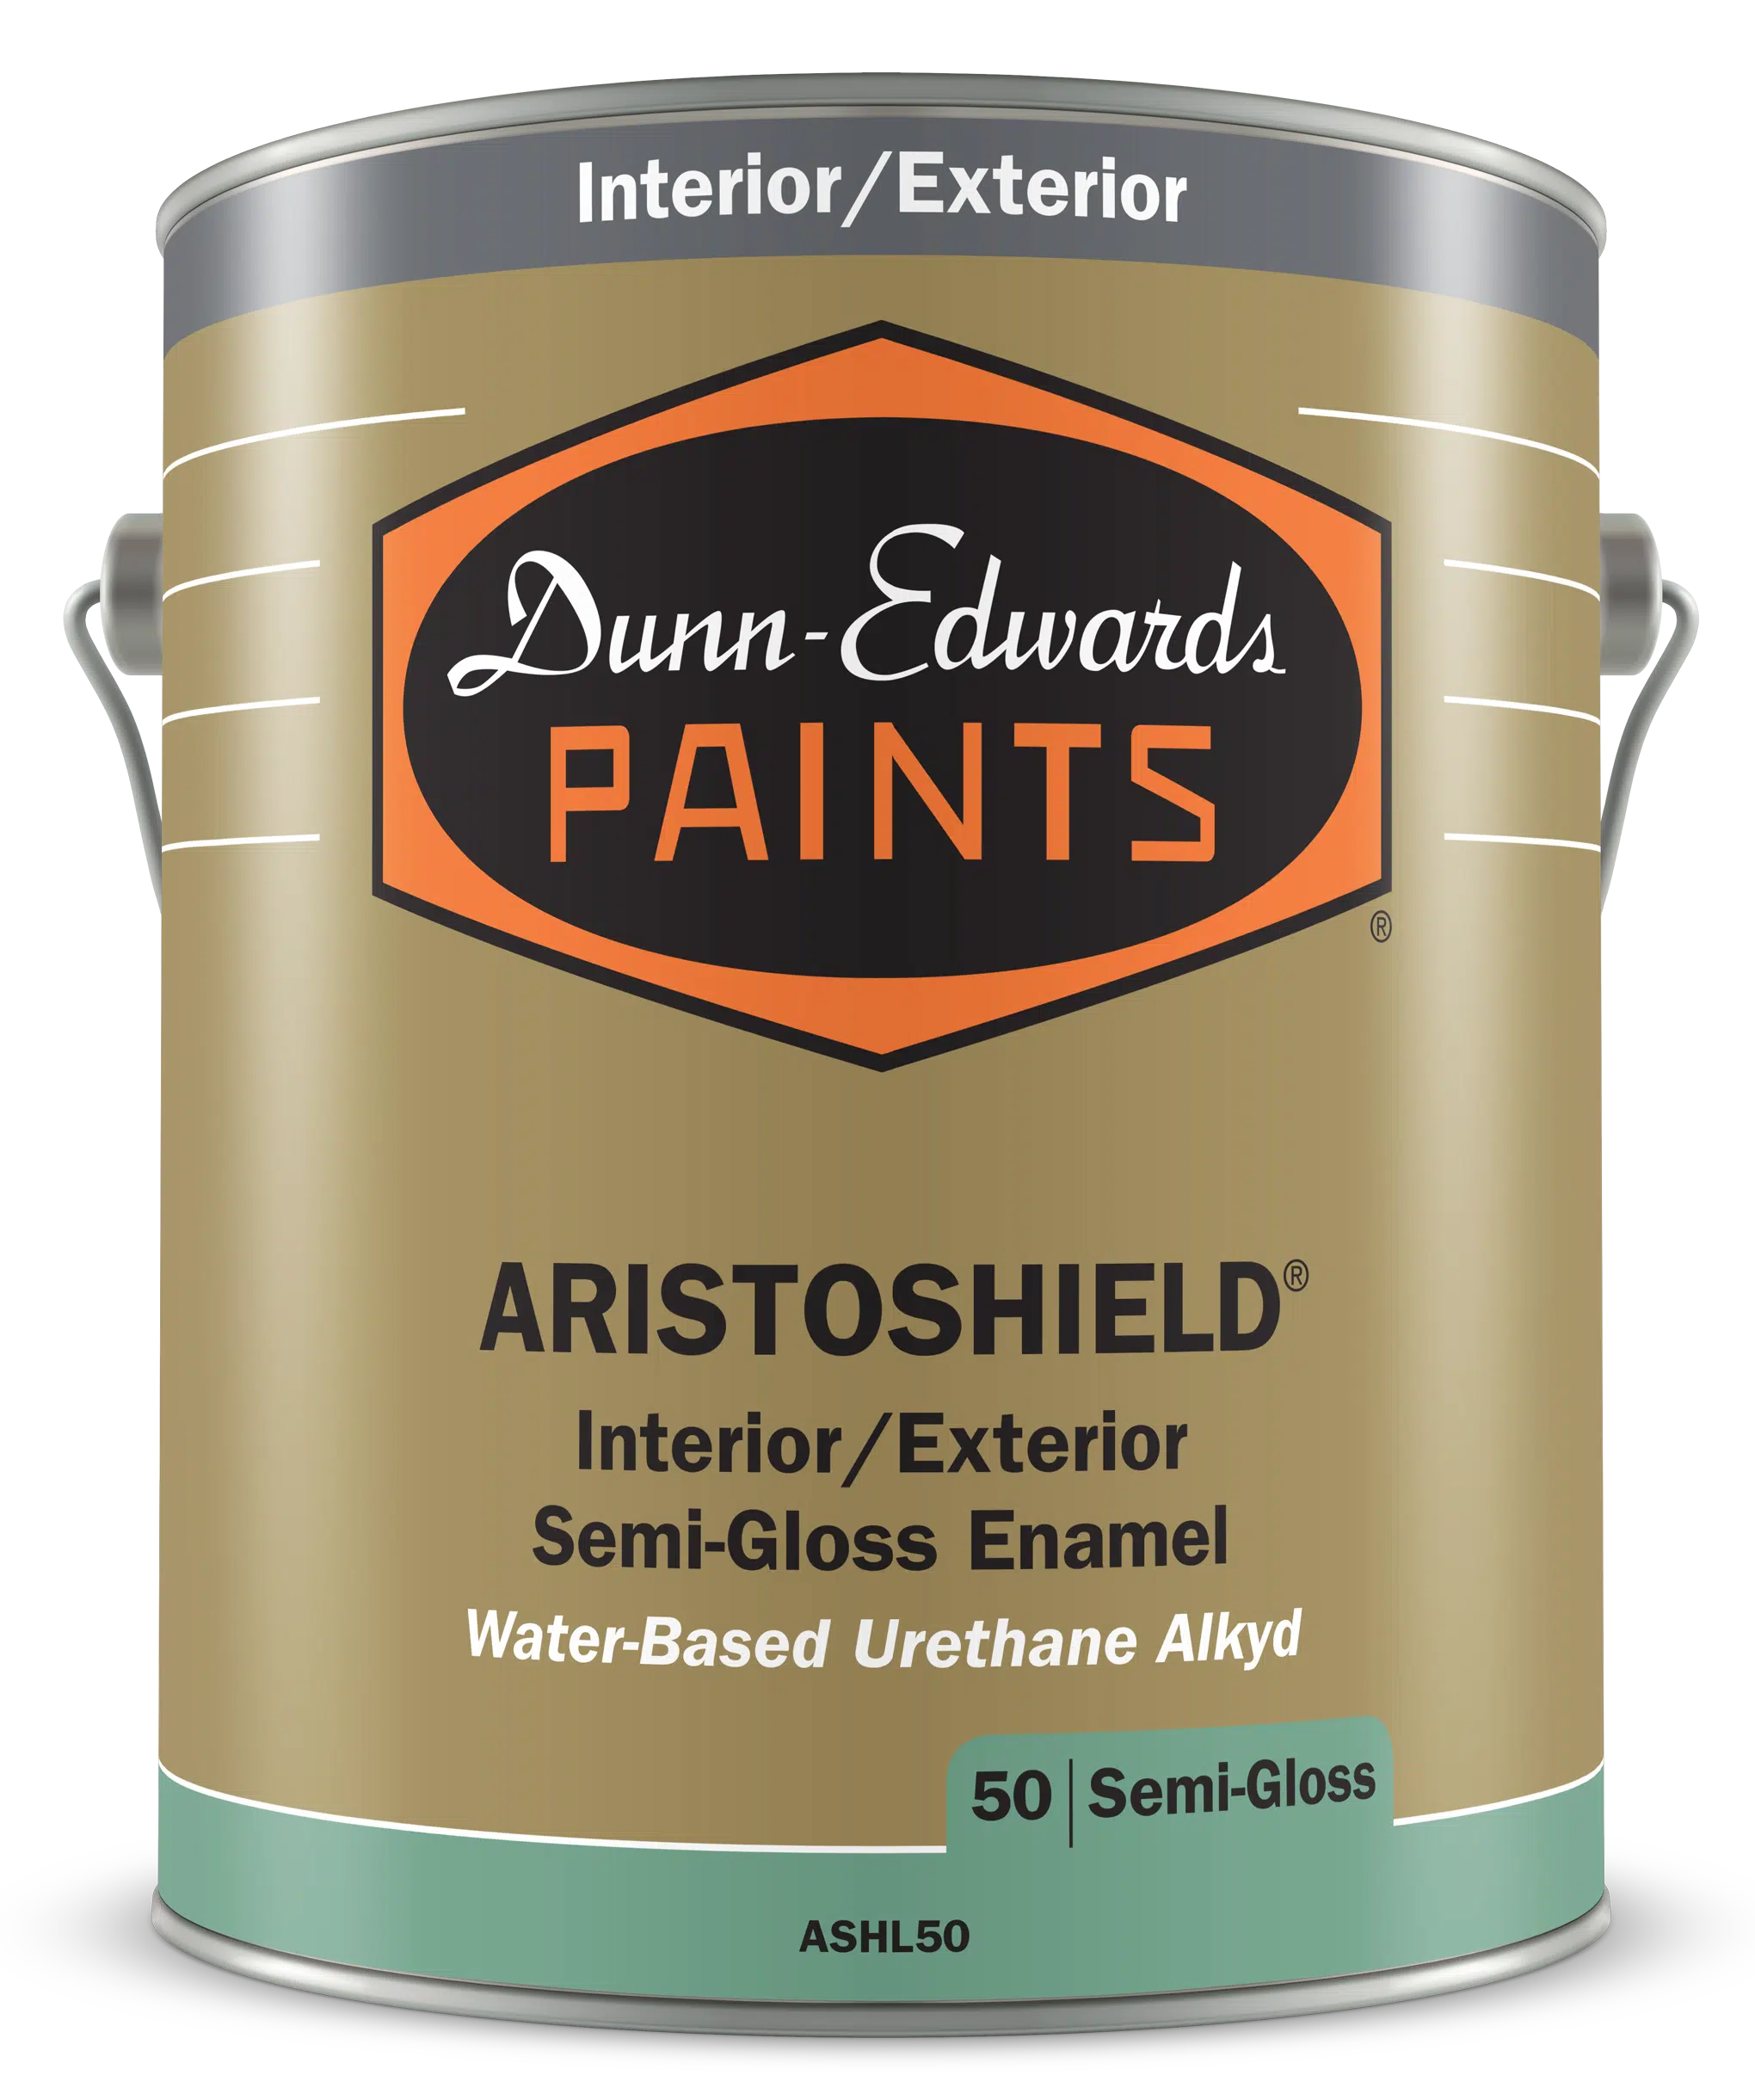 ARISTOSHIELD Interior/Exterior Semi-Gloss Paint Can